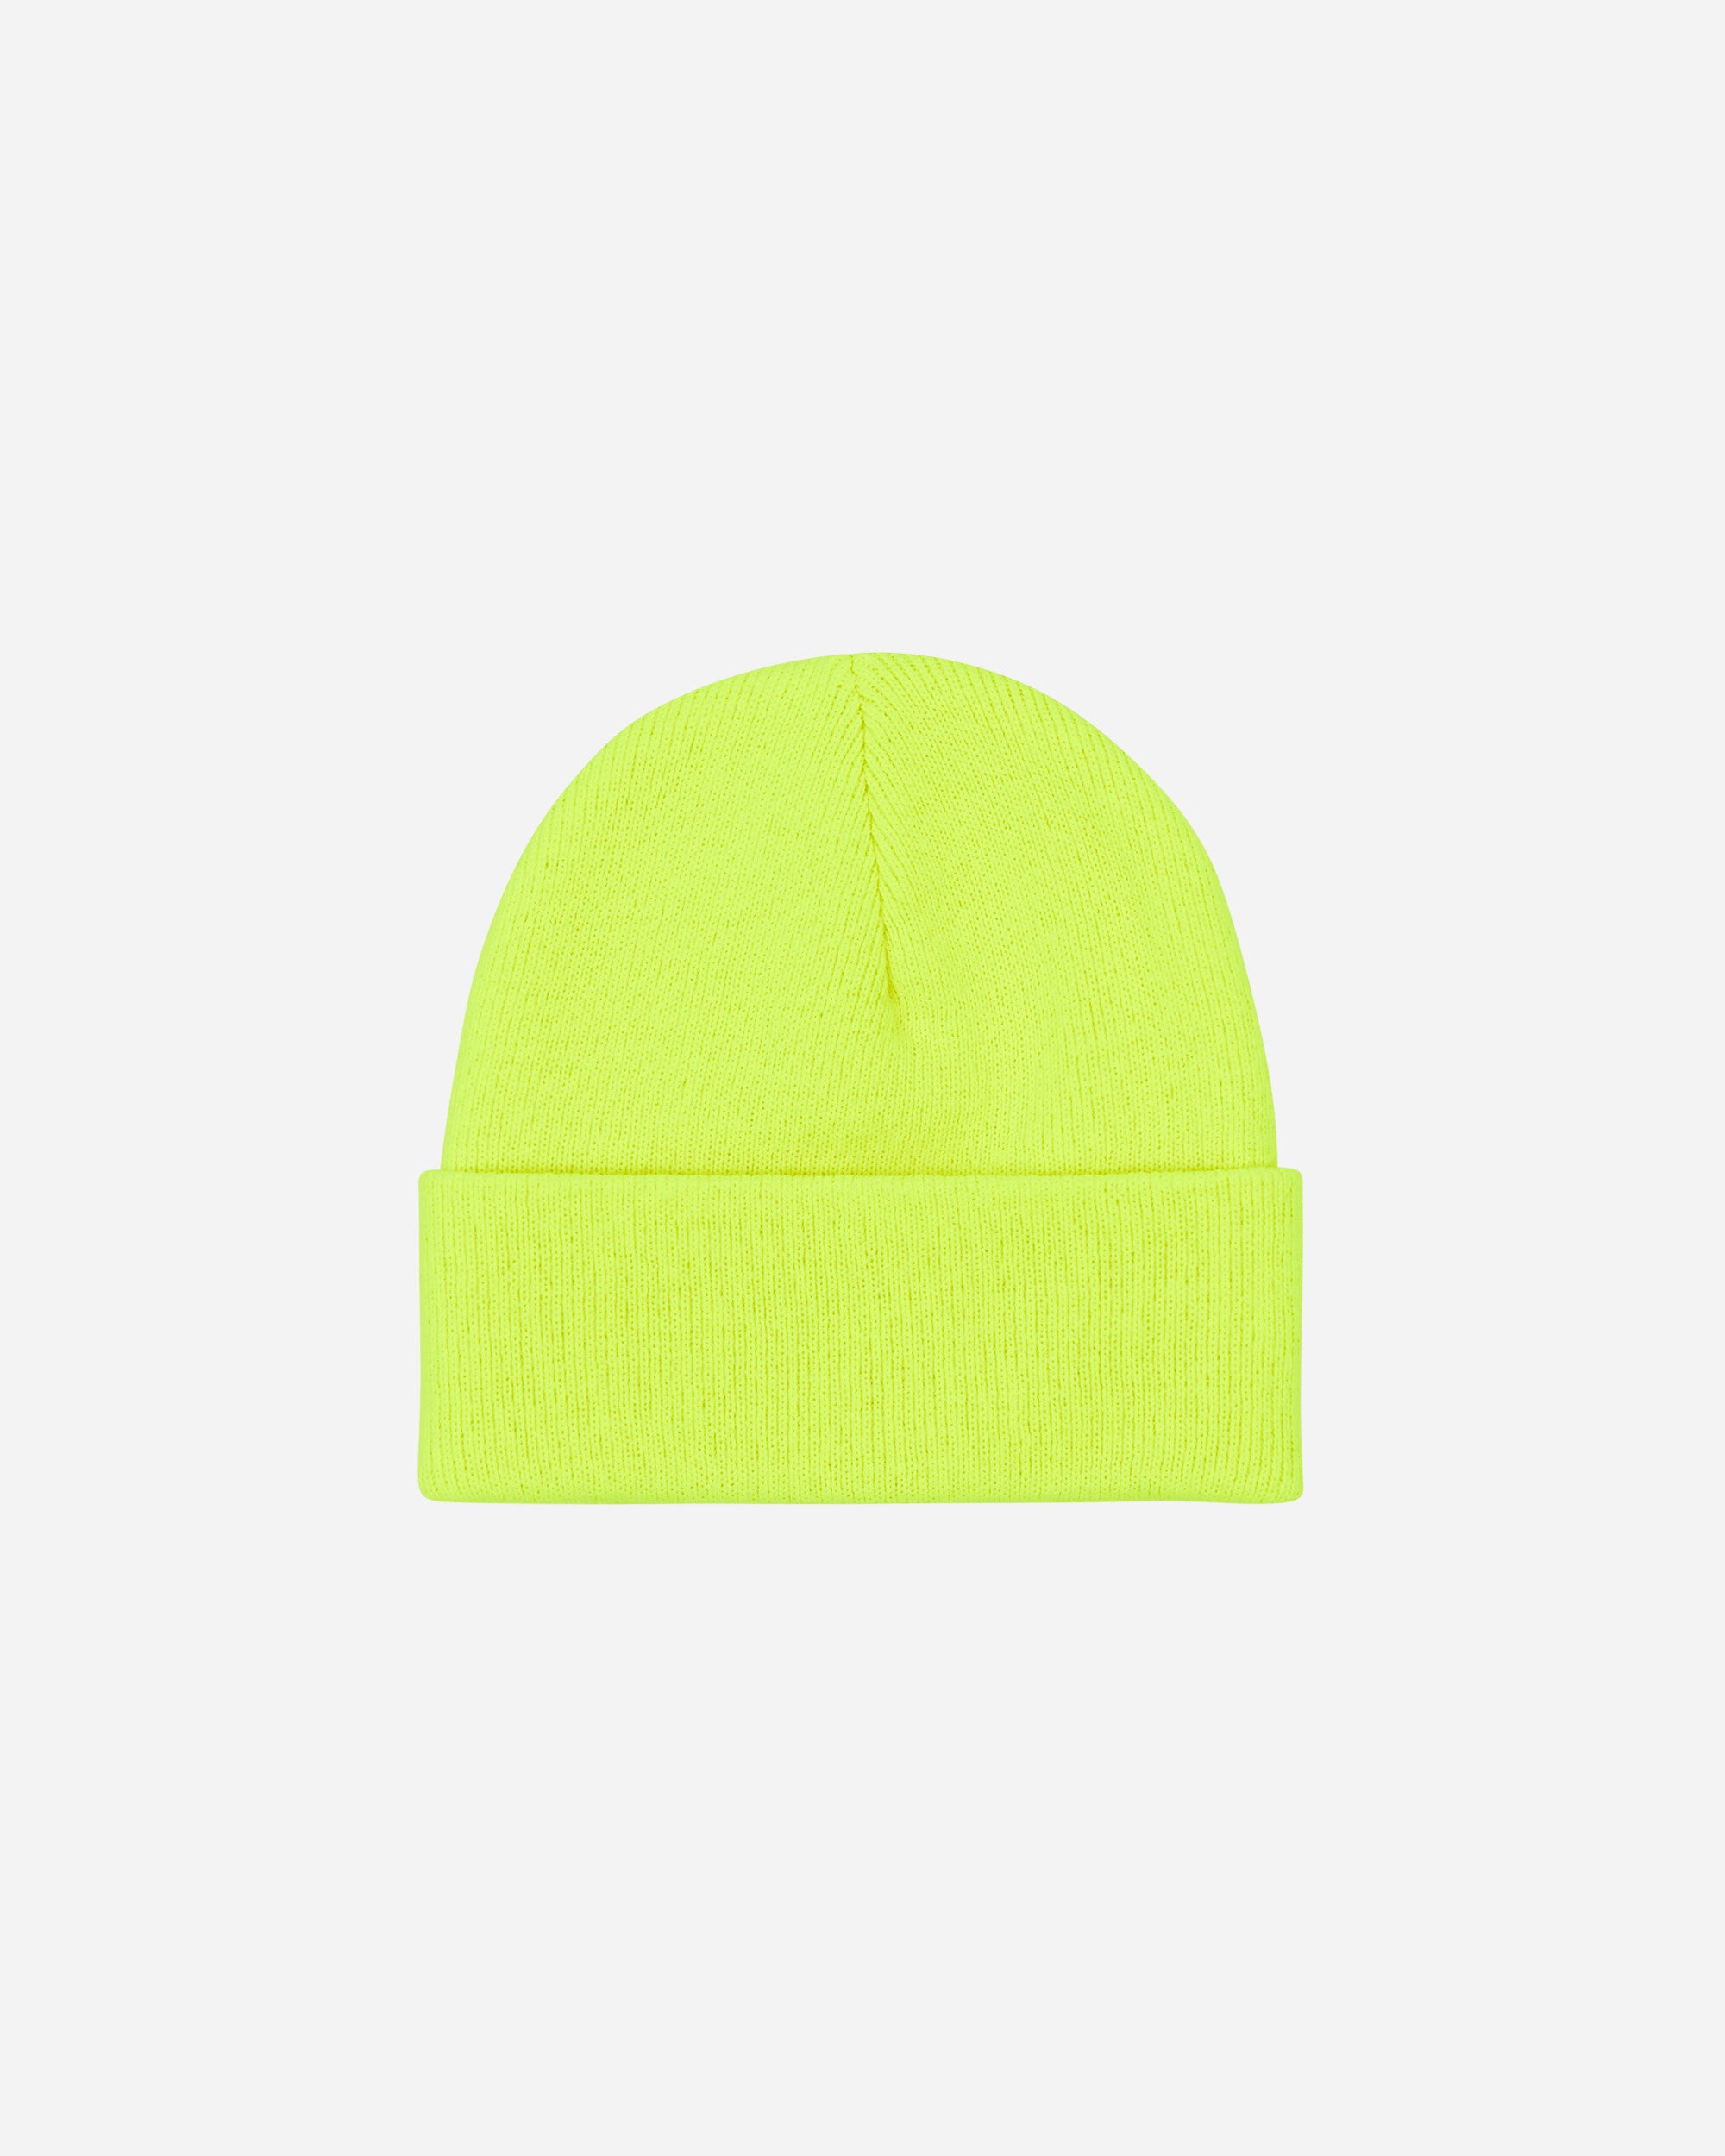 Stüssy Stock Cuff Beanie Safety Yellow Hats Beanies 1321020 SAYE